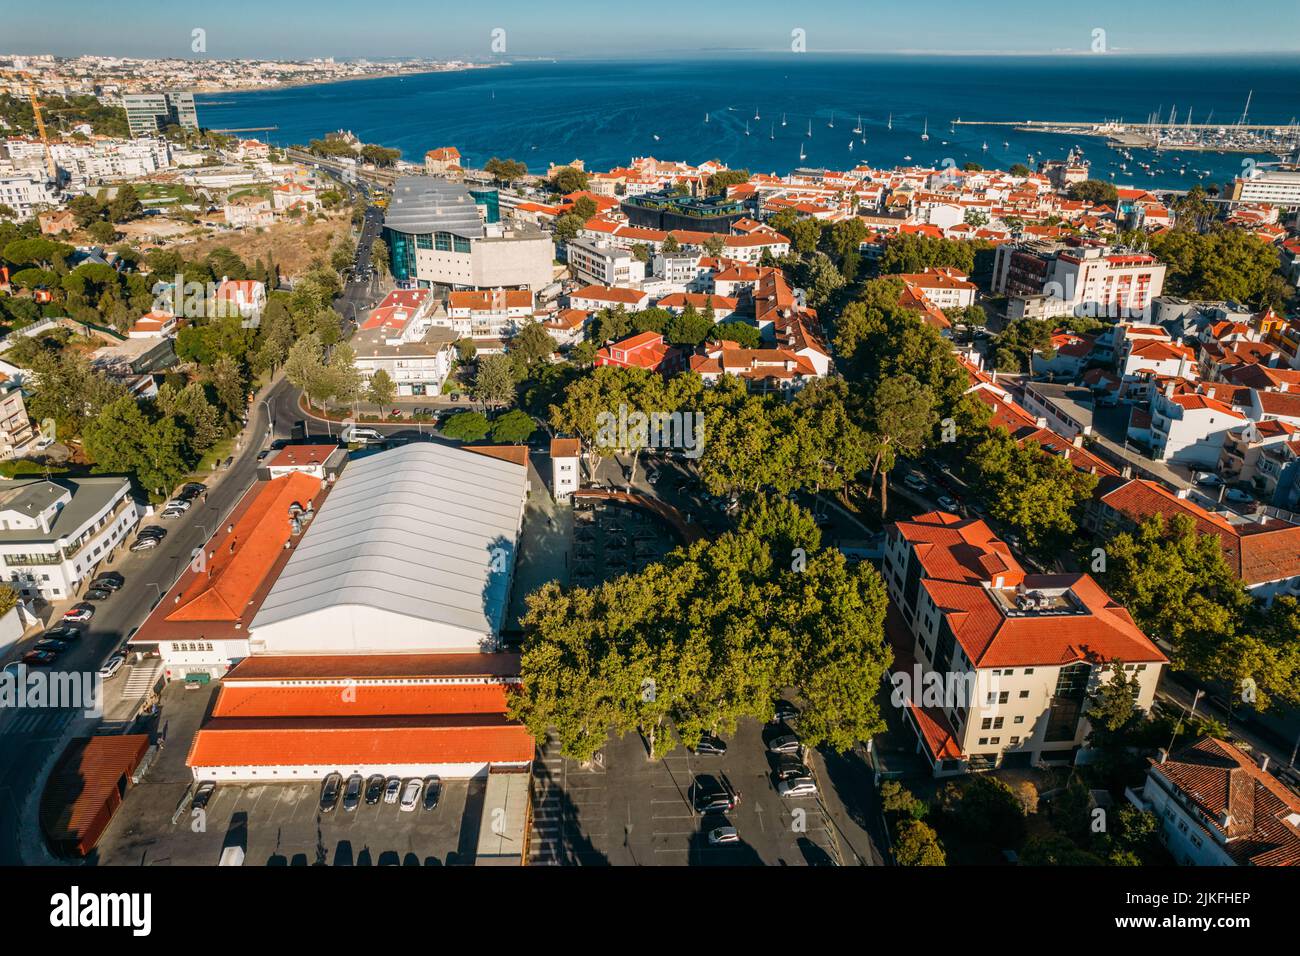 Vista aérea del Mercado de Cascais, también conocido como Mercado da Vila en Cascais, Portugal, con la bahía visible al fondo Foto de stock